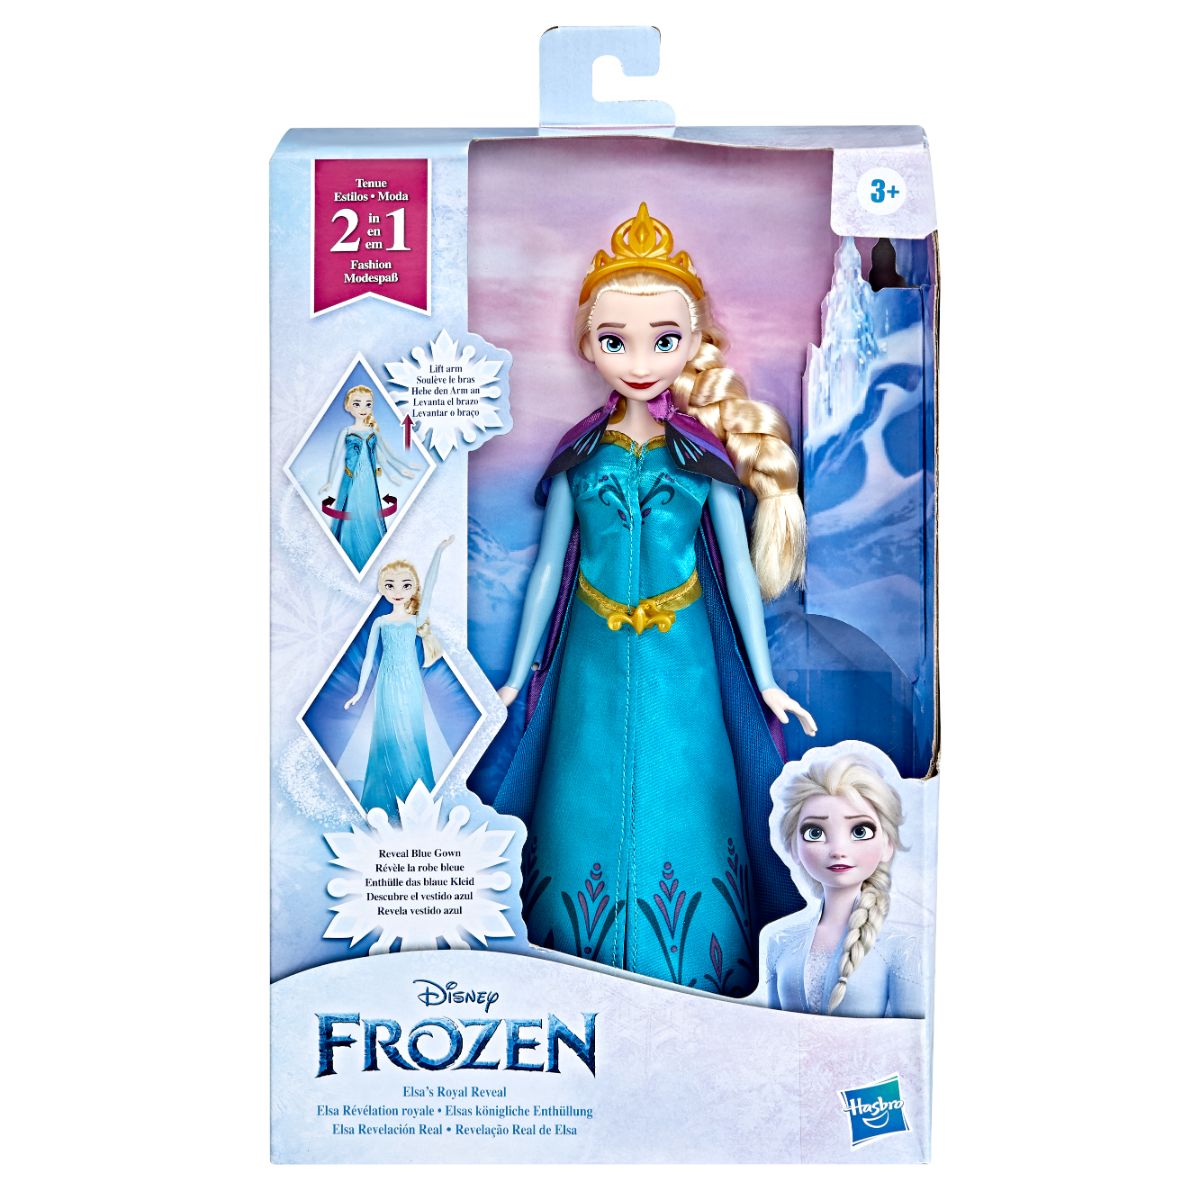 Papusa Frozen 2, Dezvaluirea regala a Elsei Disney Frozen 2